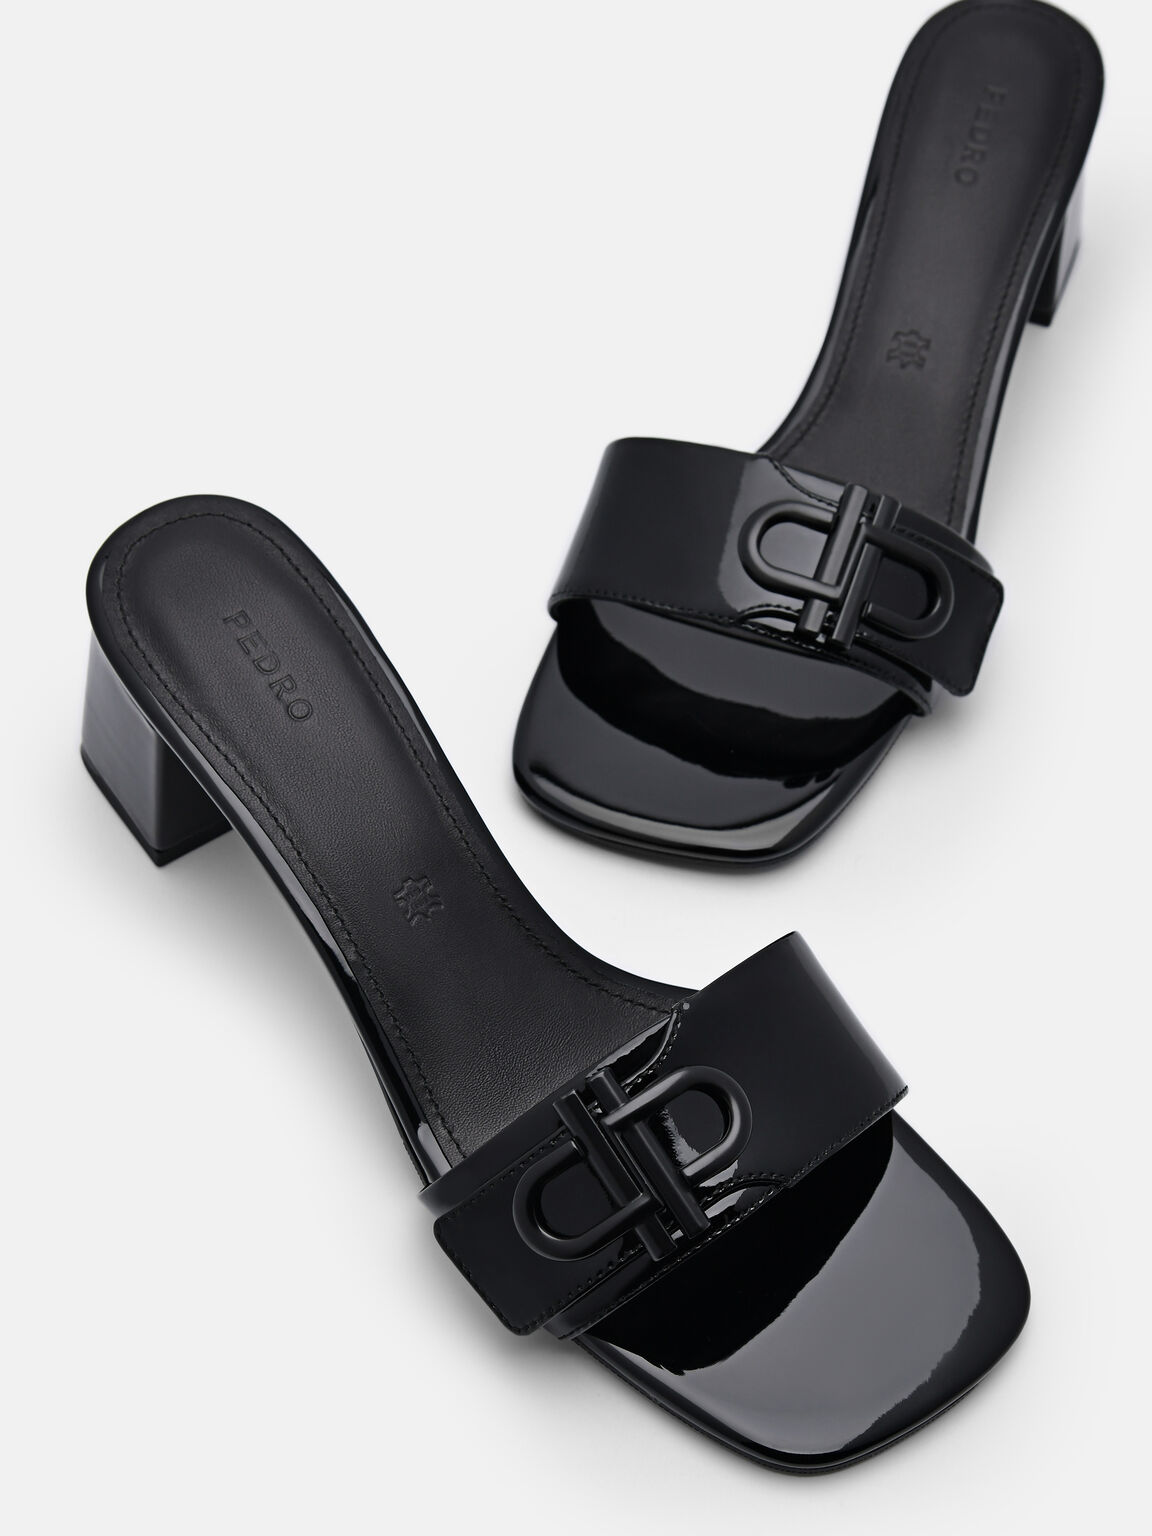 PEDRO Icon Leather Heel Sandals, Black, hi-res